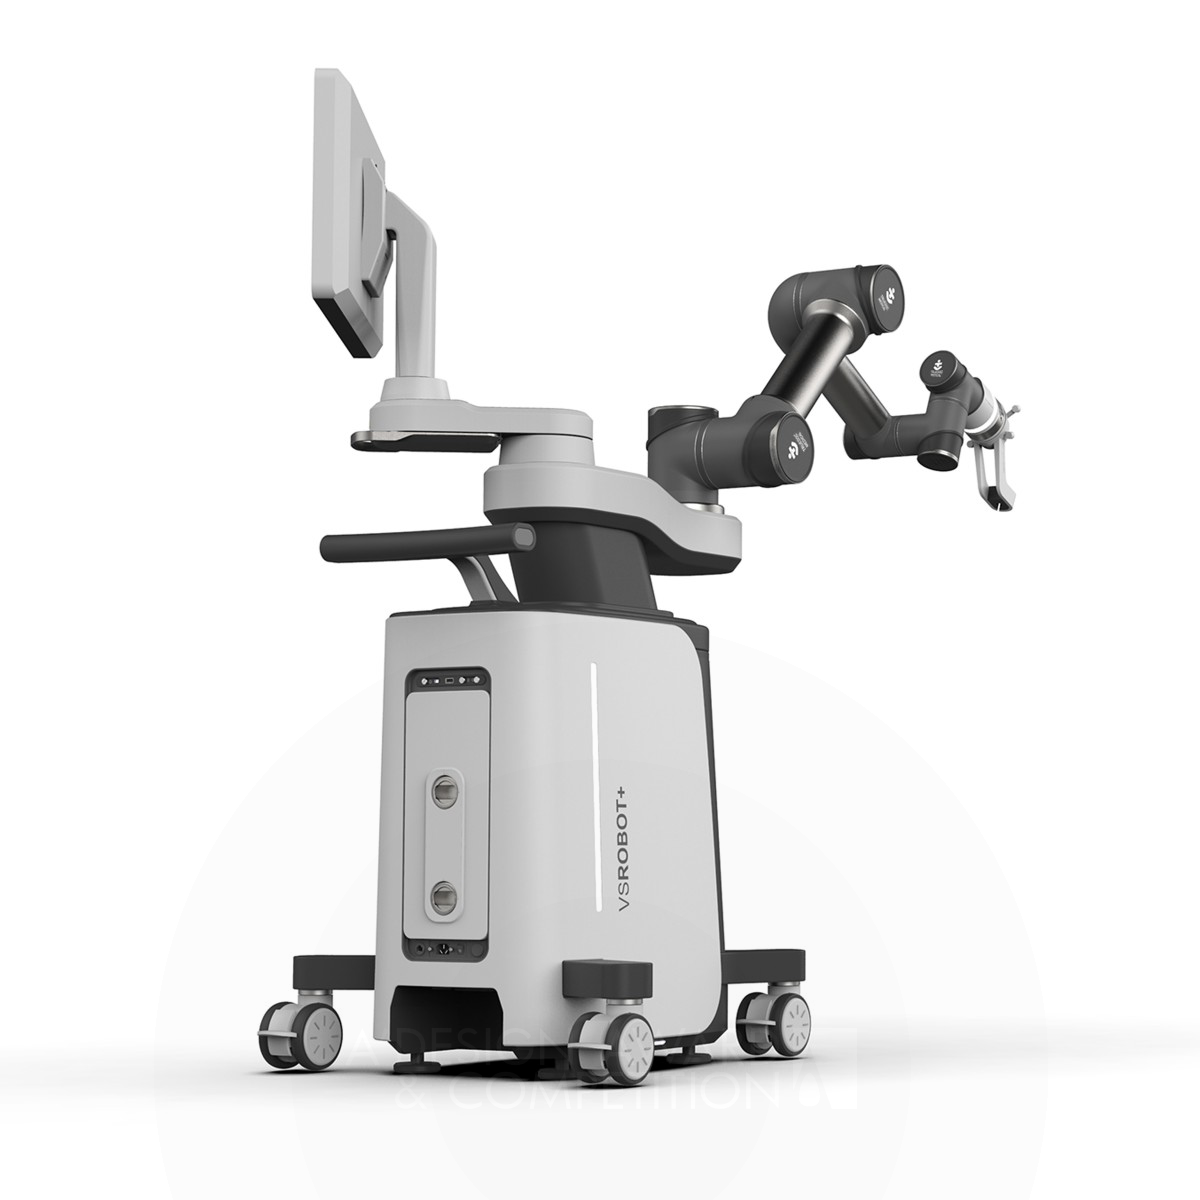 NS100 Orthopedic Robotic Surgery System Orthopedic Surgical Robot